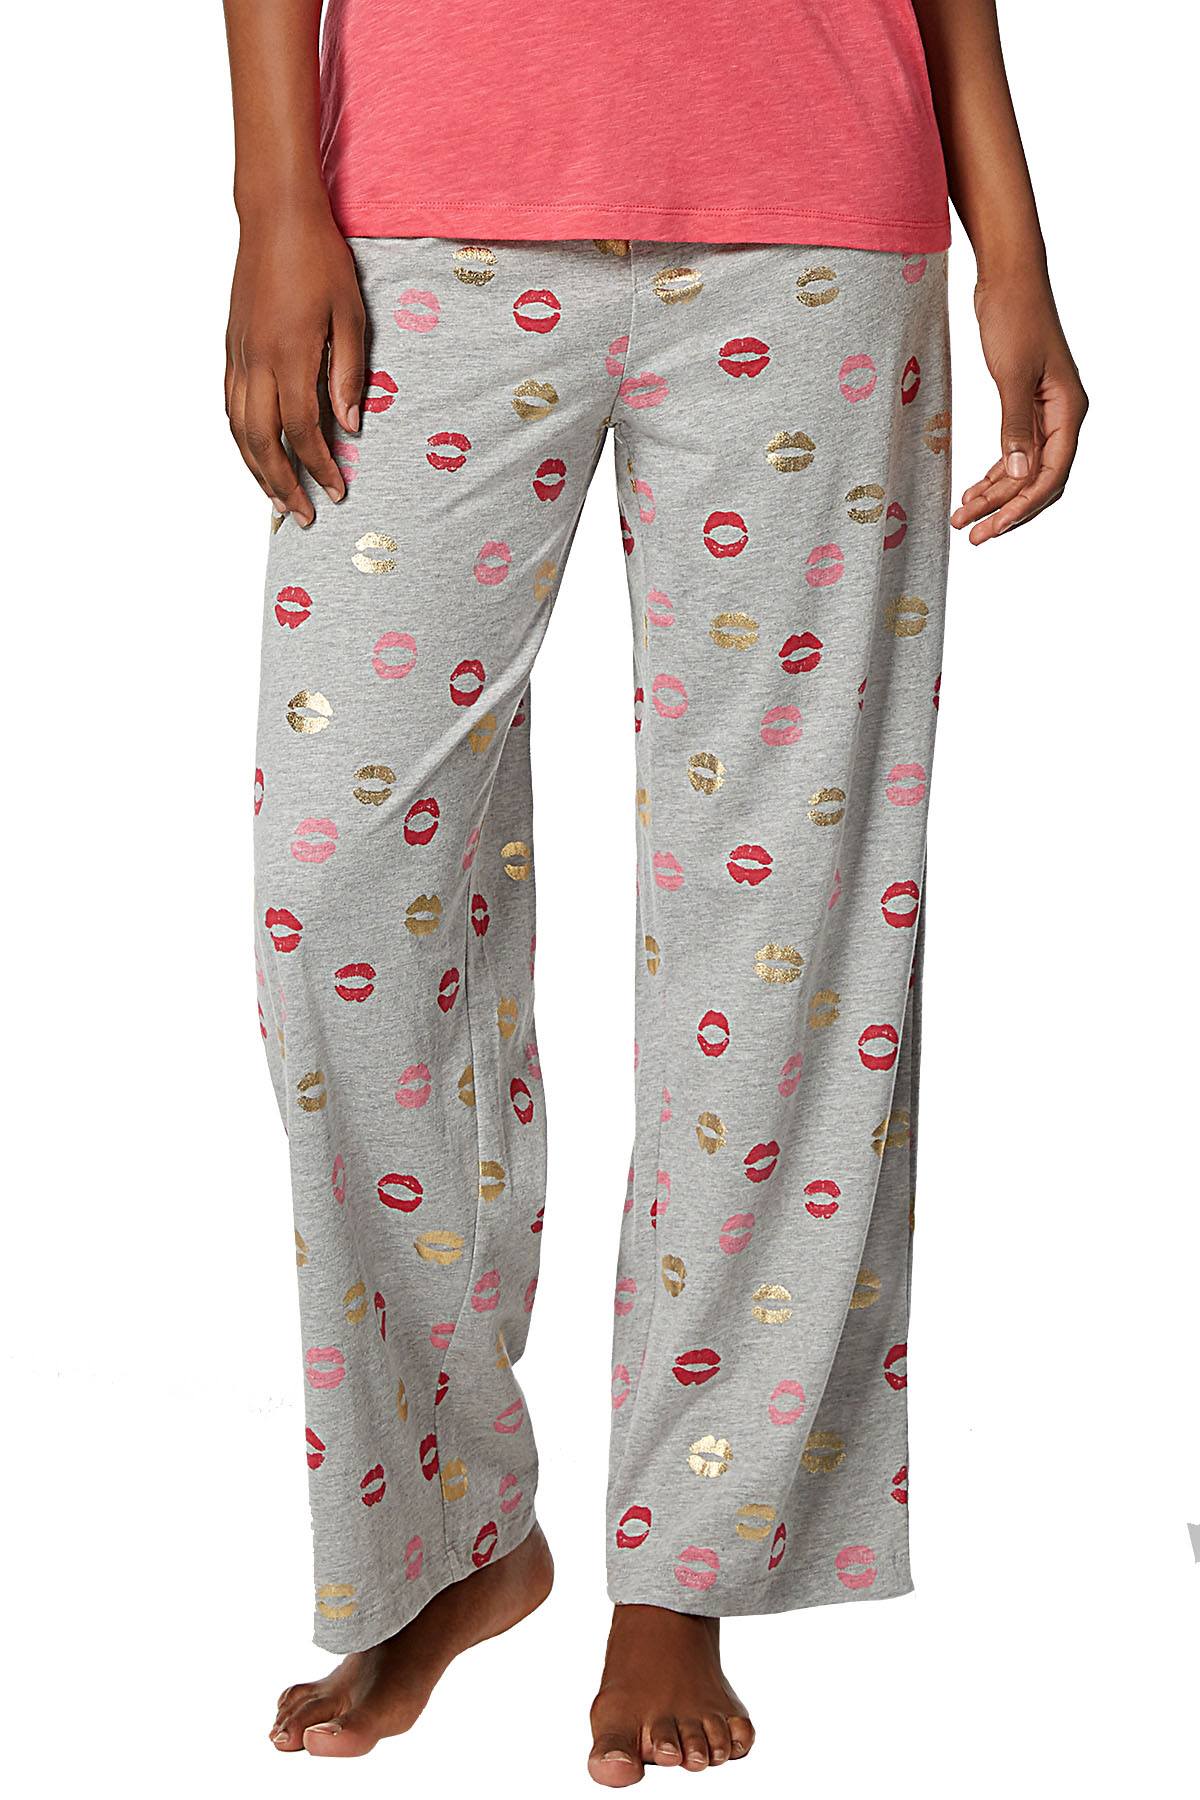 Hue Light Heather-Grey Novelty Kiss Lips Print Pajama Pant